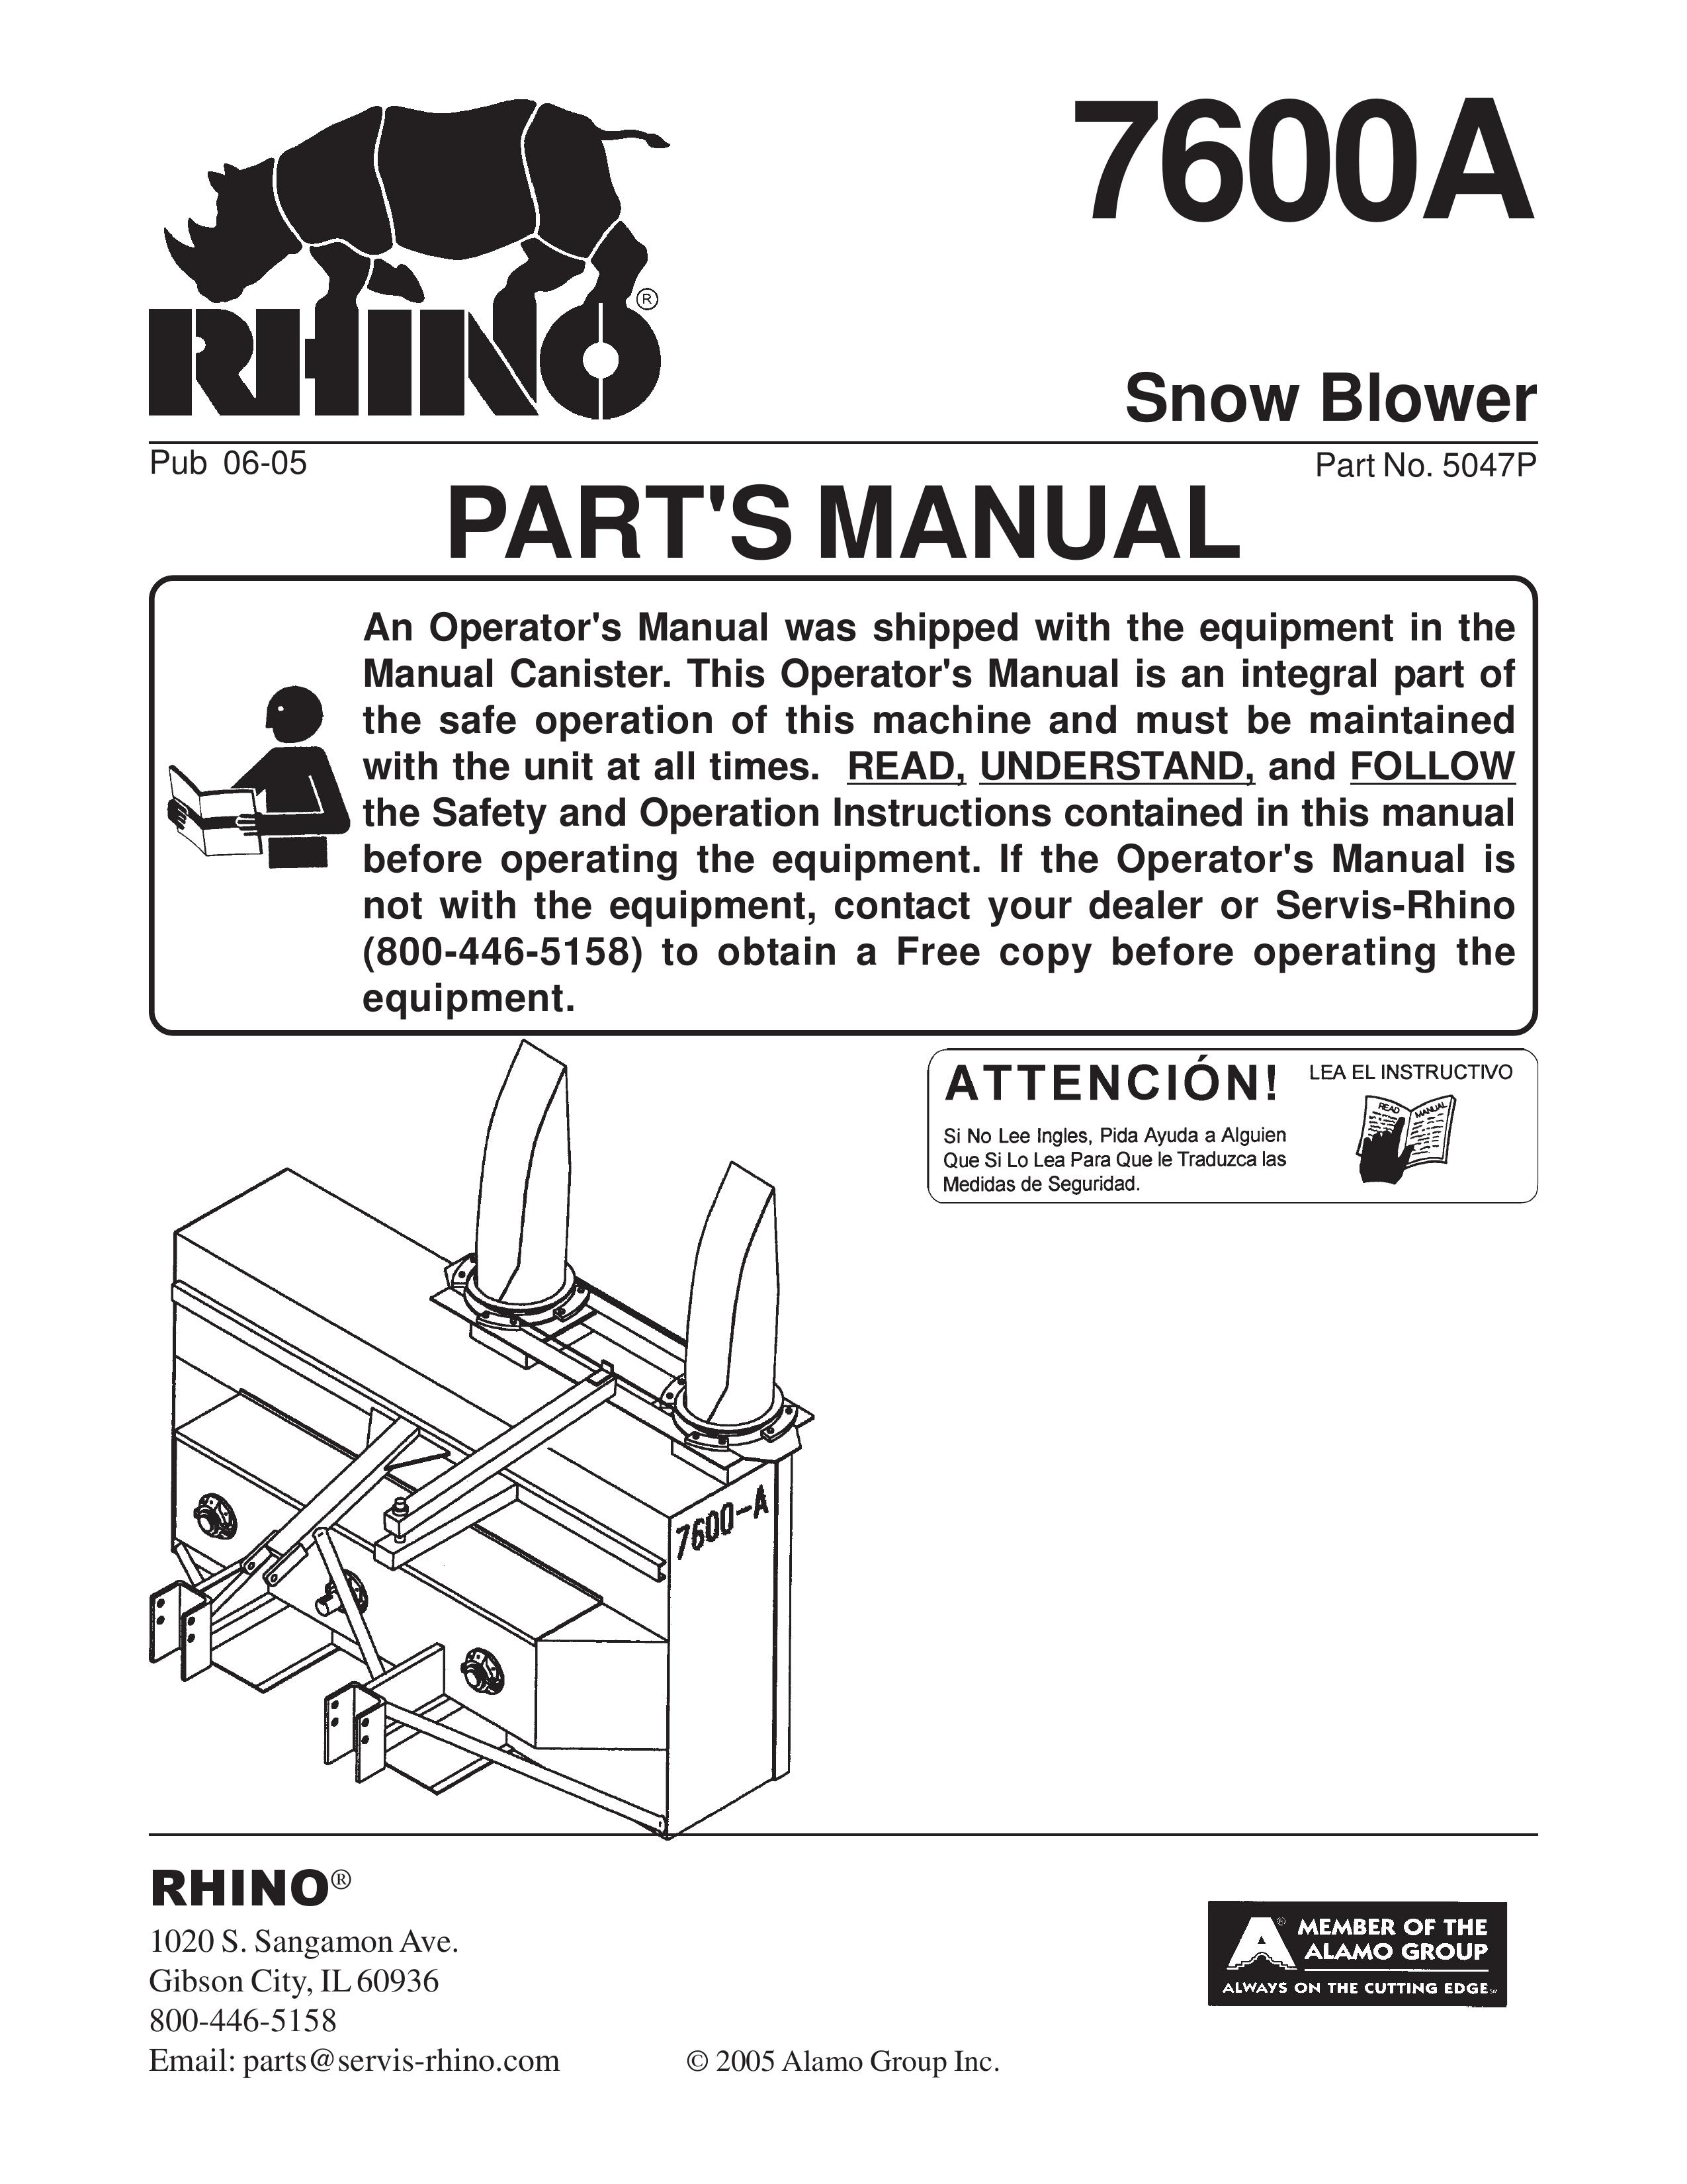 Servis-Rhino 7600A Snow Blower User Manual